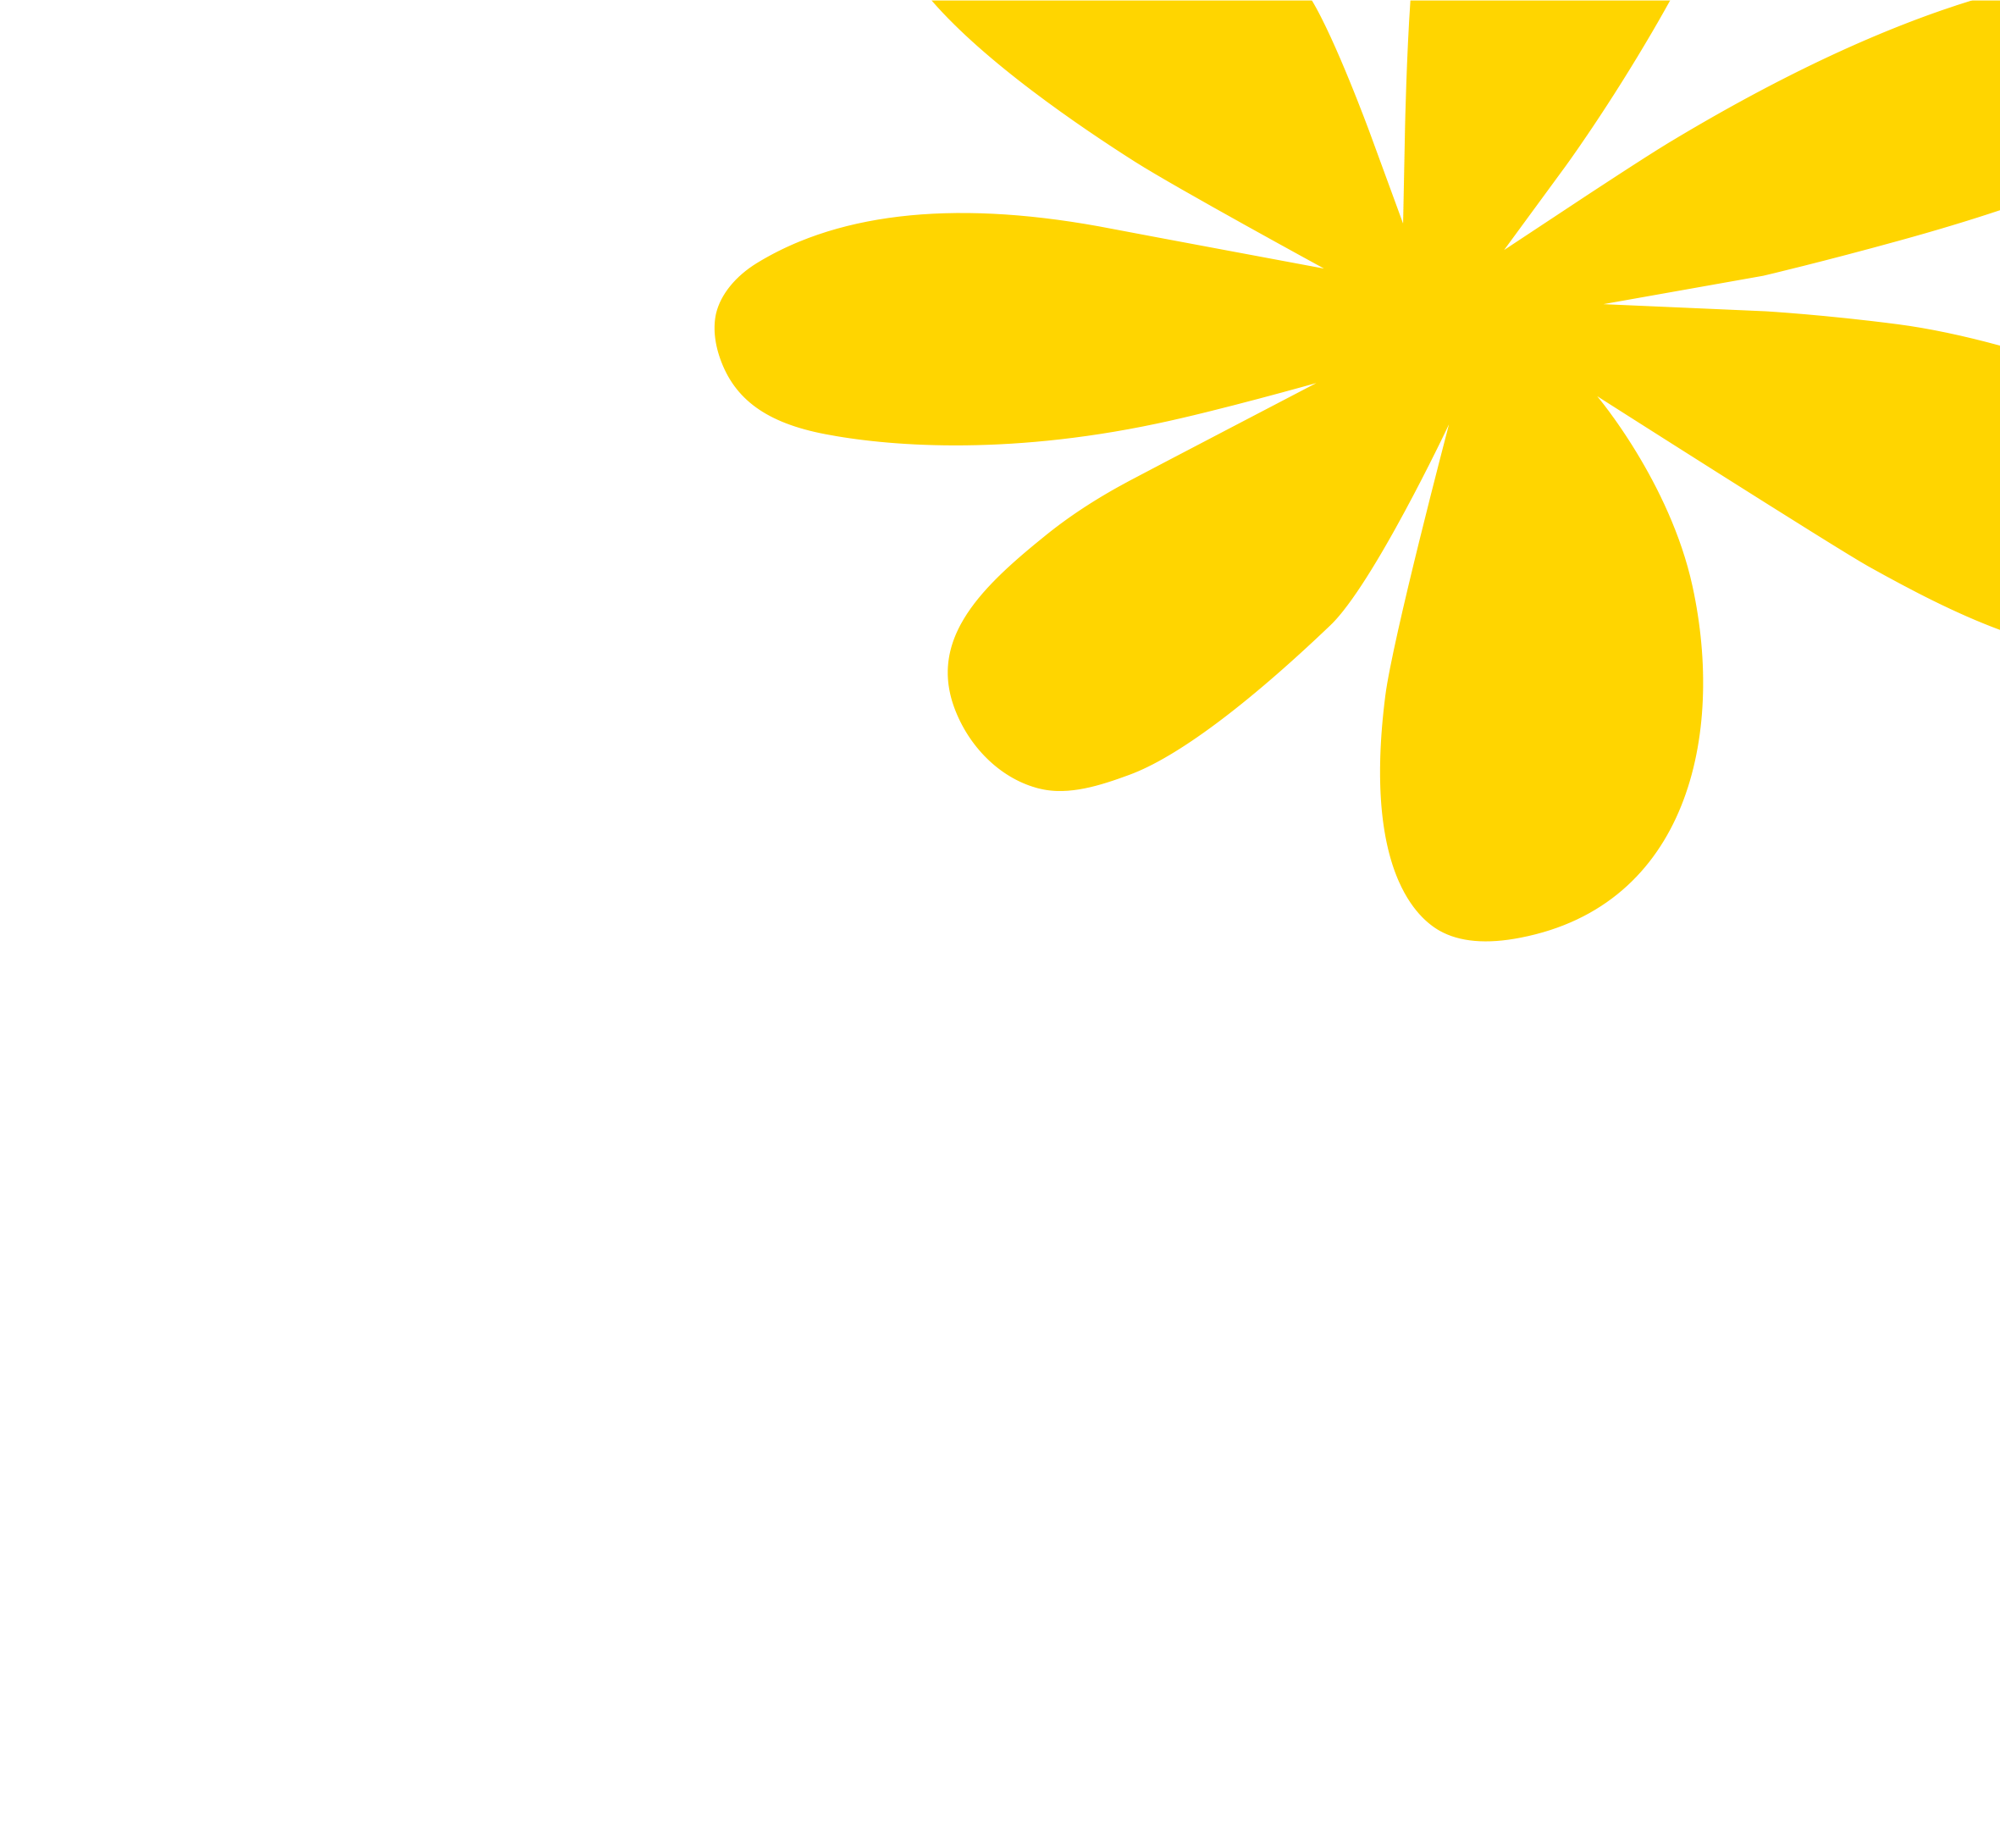 camping flower auvergne